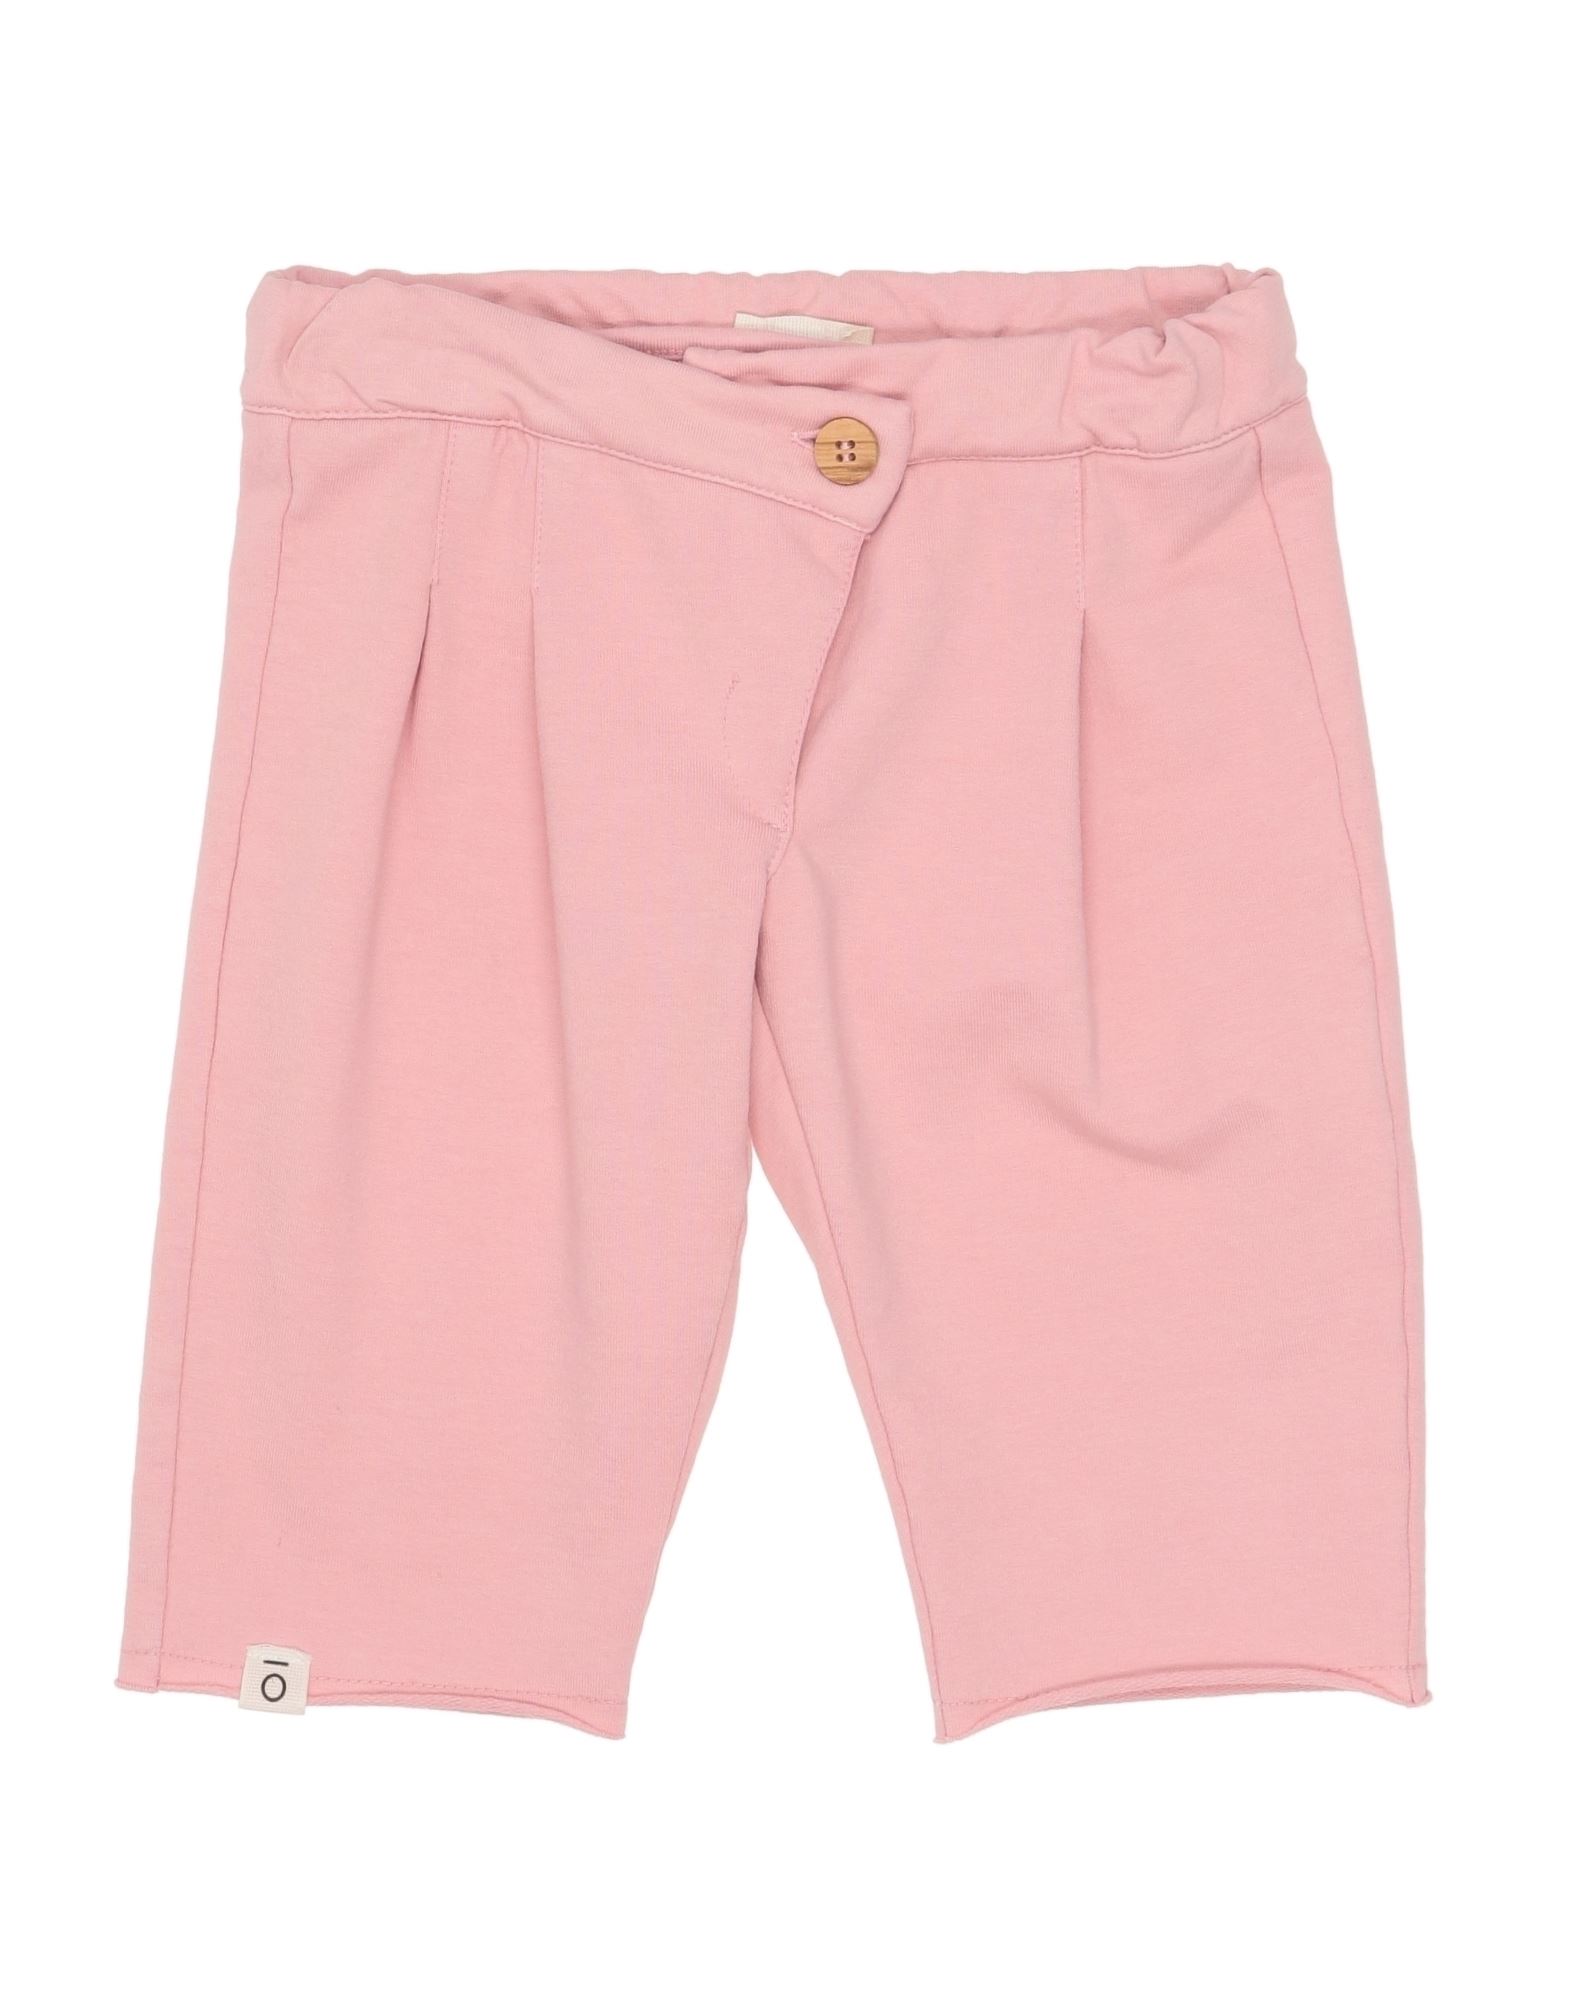 Mapero Kids' Pants In Pink